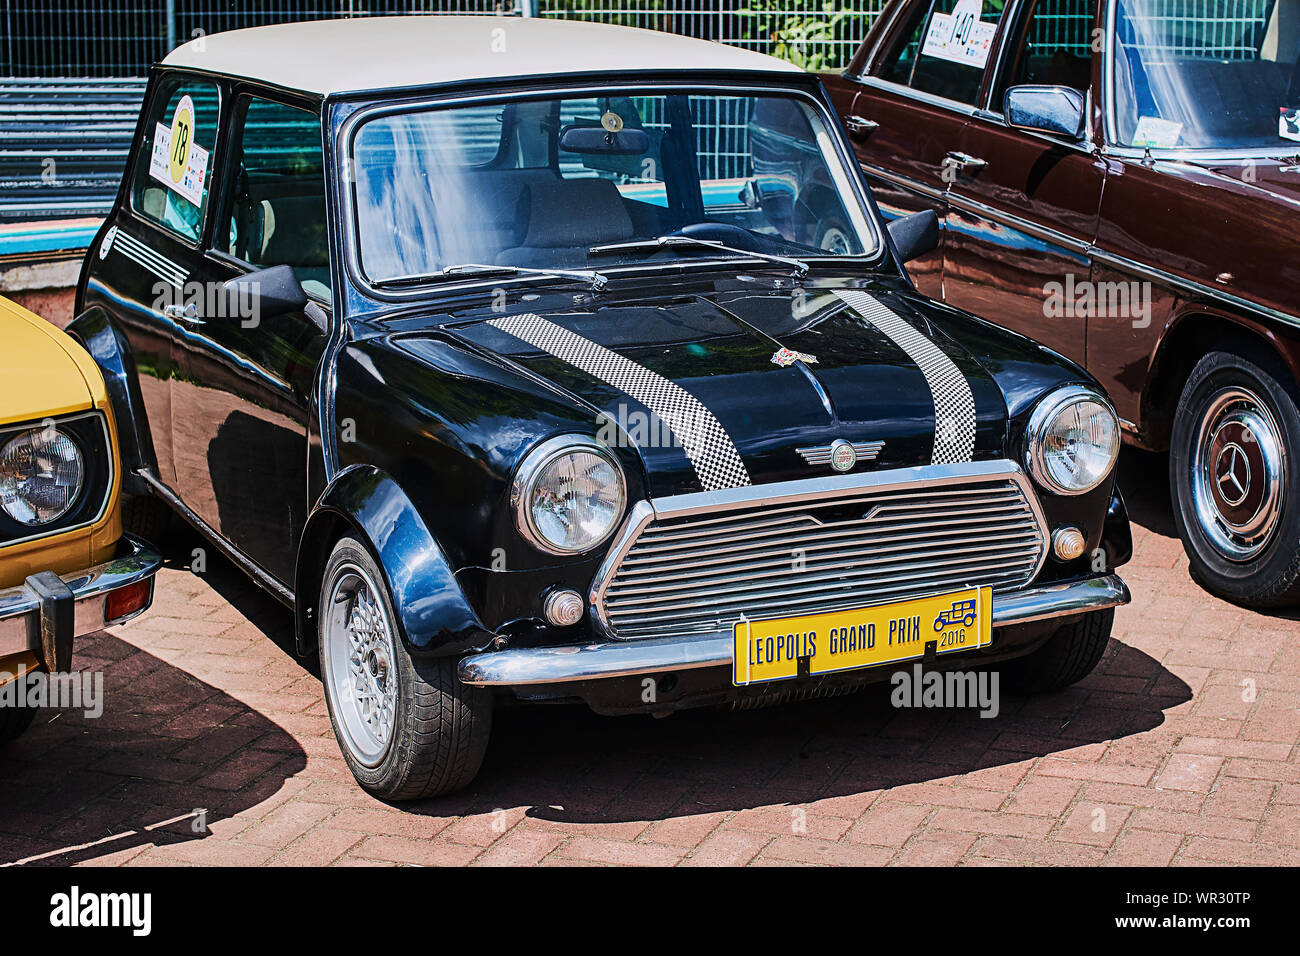 Old vintage stylish black stripped Mini Mark Vl car Stock Photo - Alamy